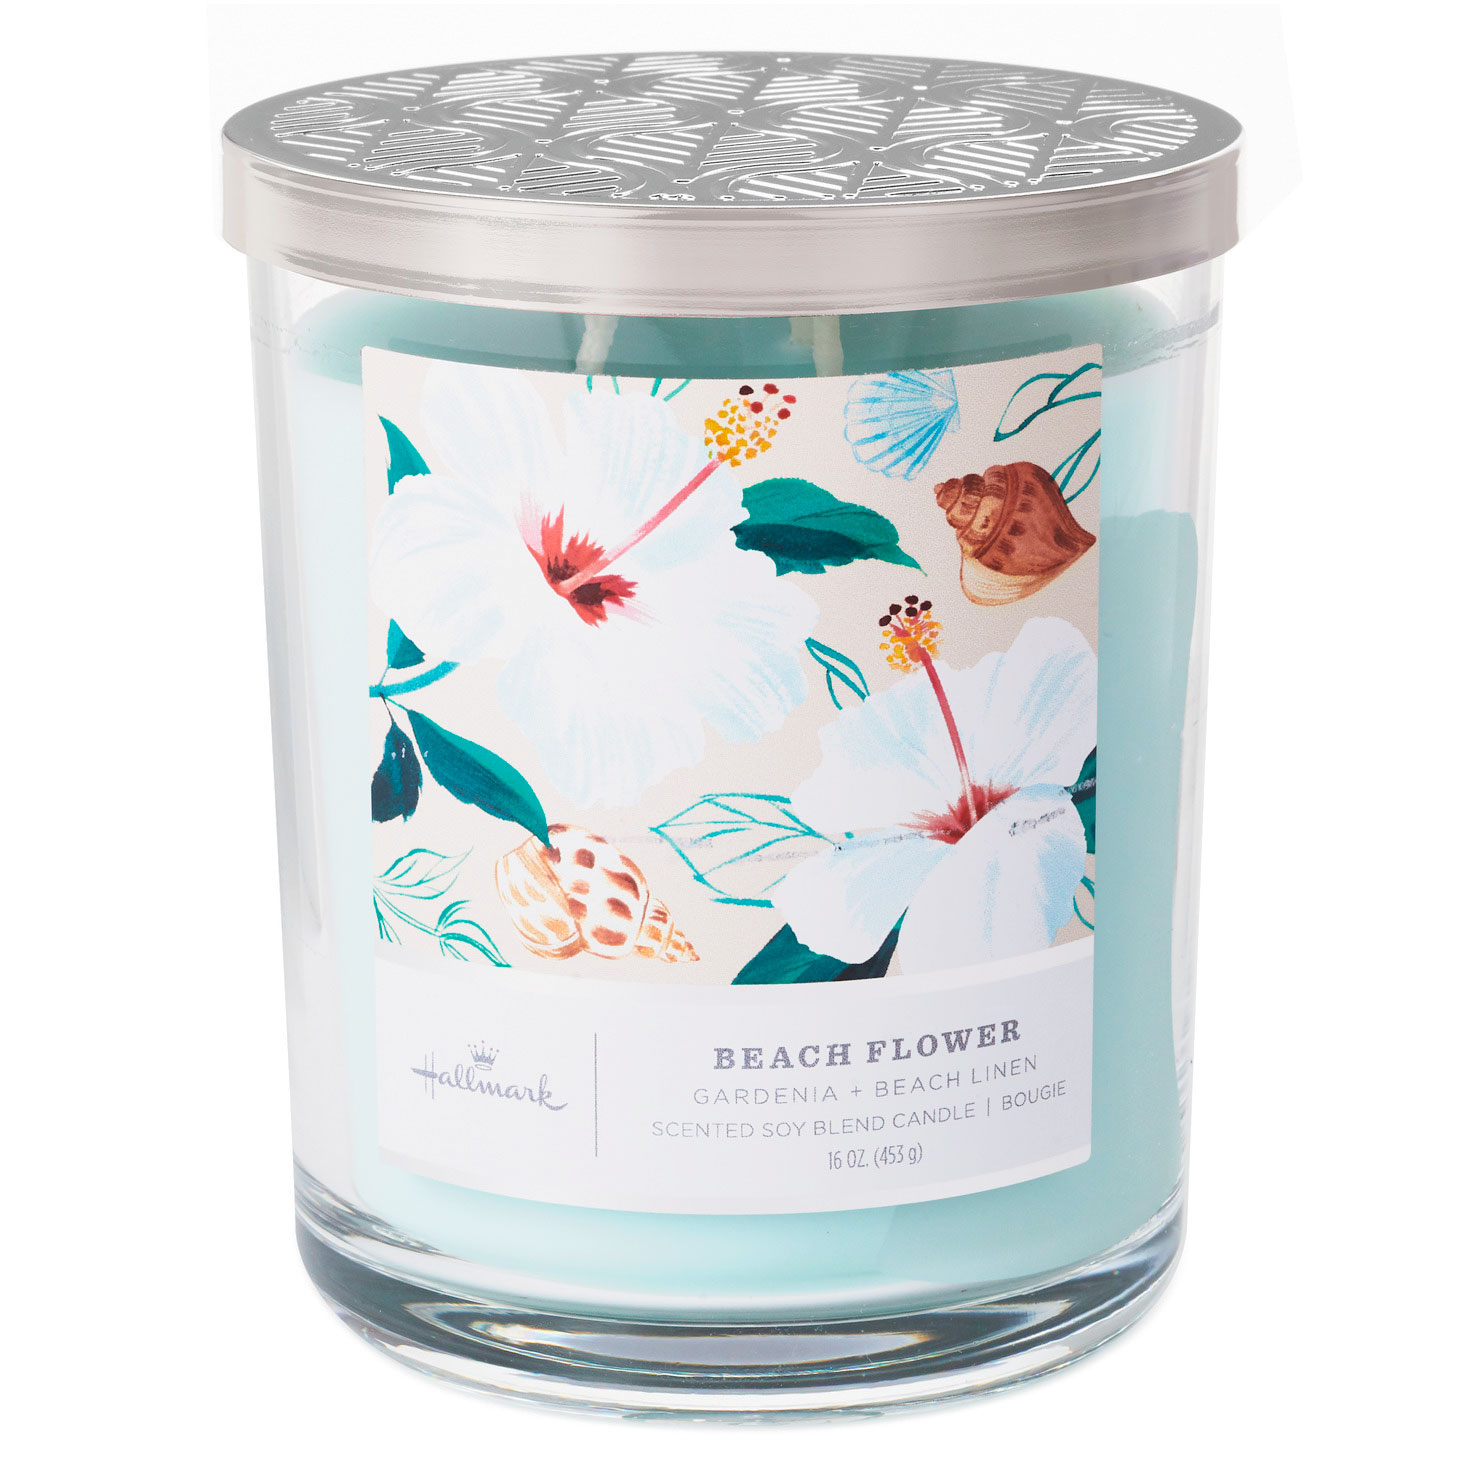 Beach Flower 3-Wick Jar Candle, 16 oz. - Candles | Hallmark